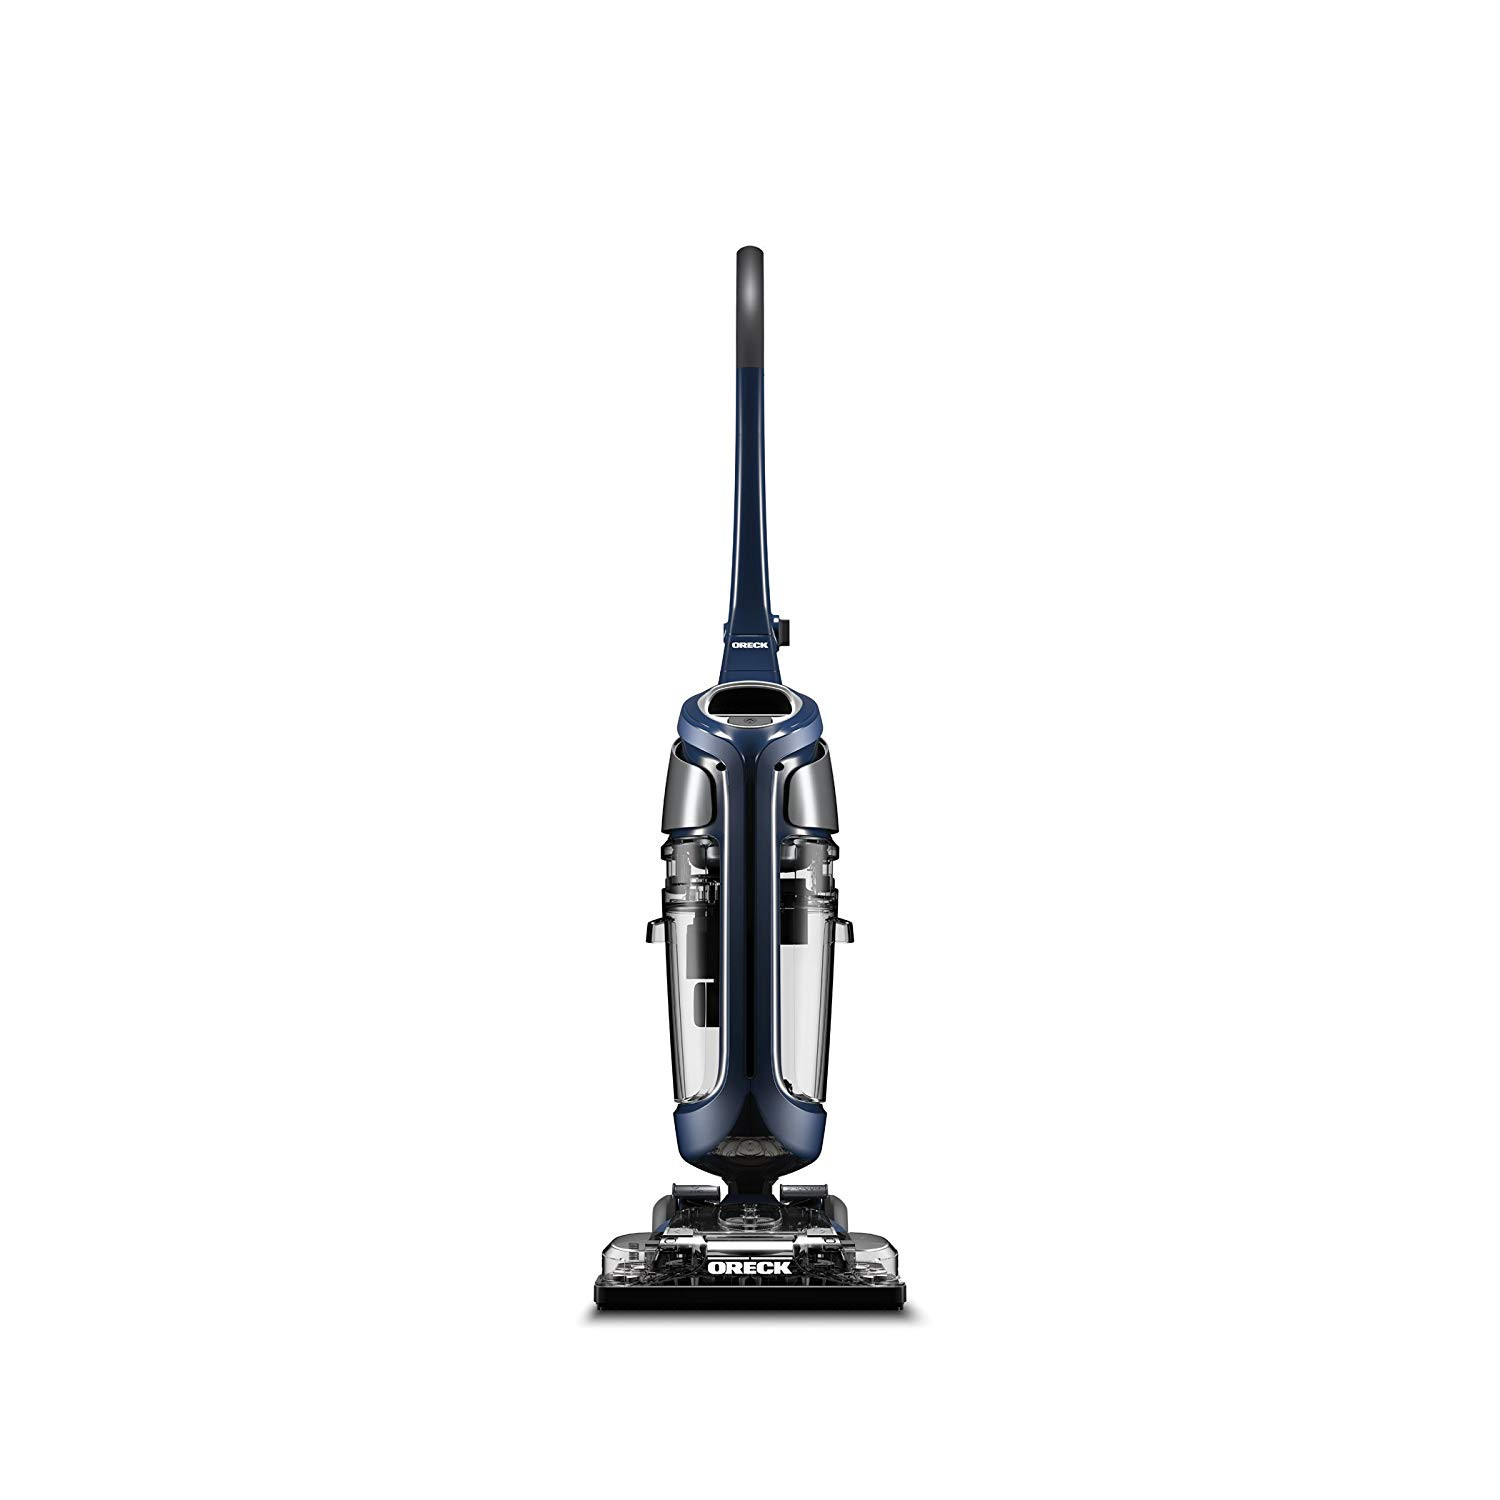 Top 10 Vacuums for Hardwood Floors Of Amazon Com oreck Surface Scrub Hard Floor Cleaner Corded Home Intended for Amazon Com oreck Surface Scrub Hard Floor Cleaner Corded Home Kitchen